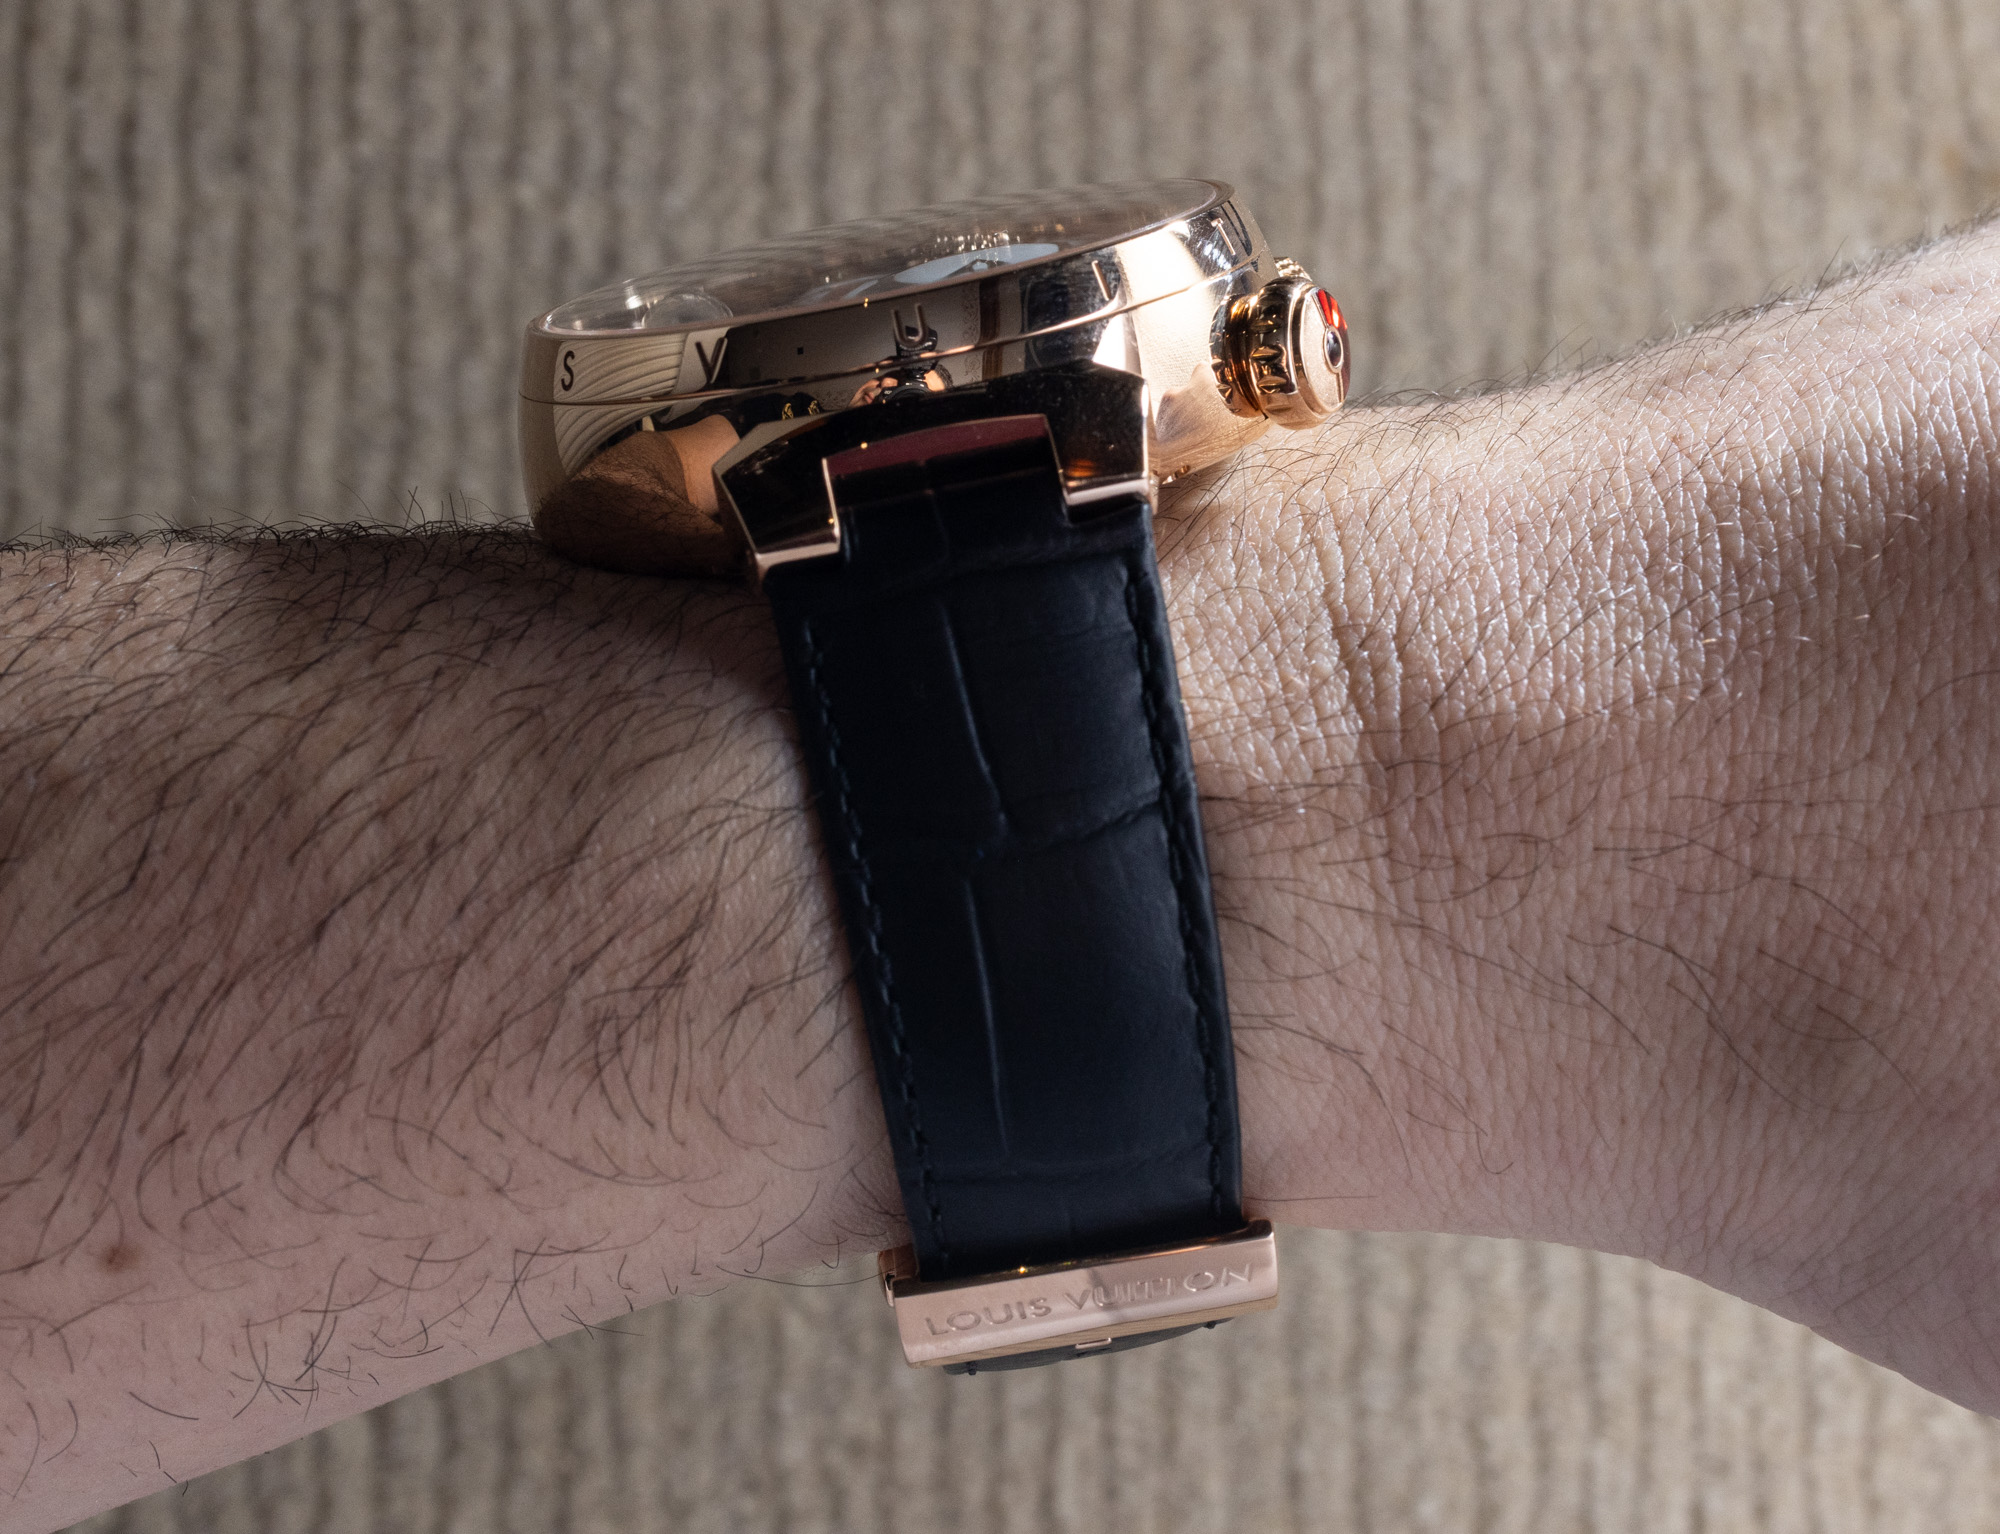 Louis Vuitton's Tambour Opera Automata Watch: A Tribute to